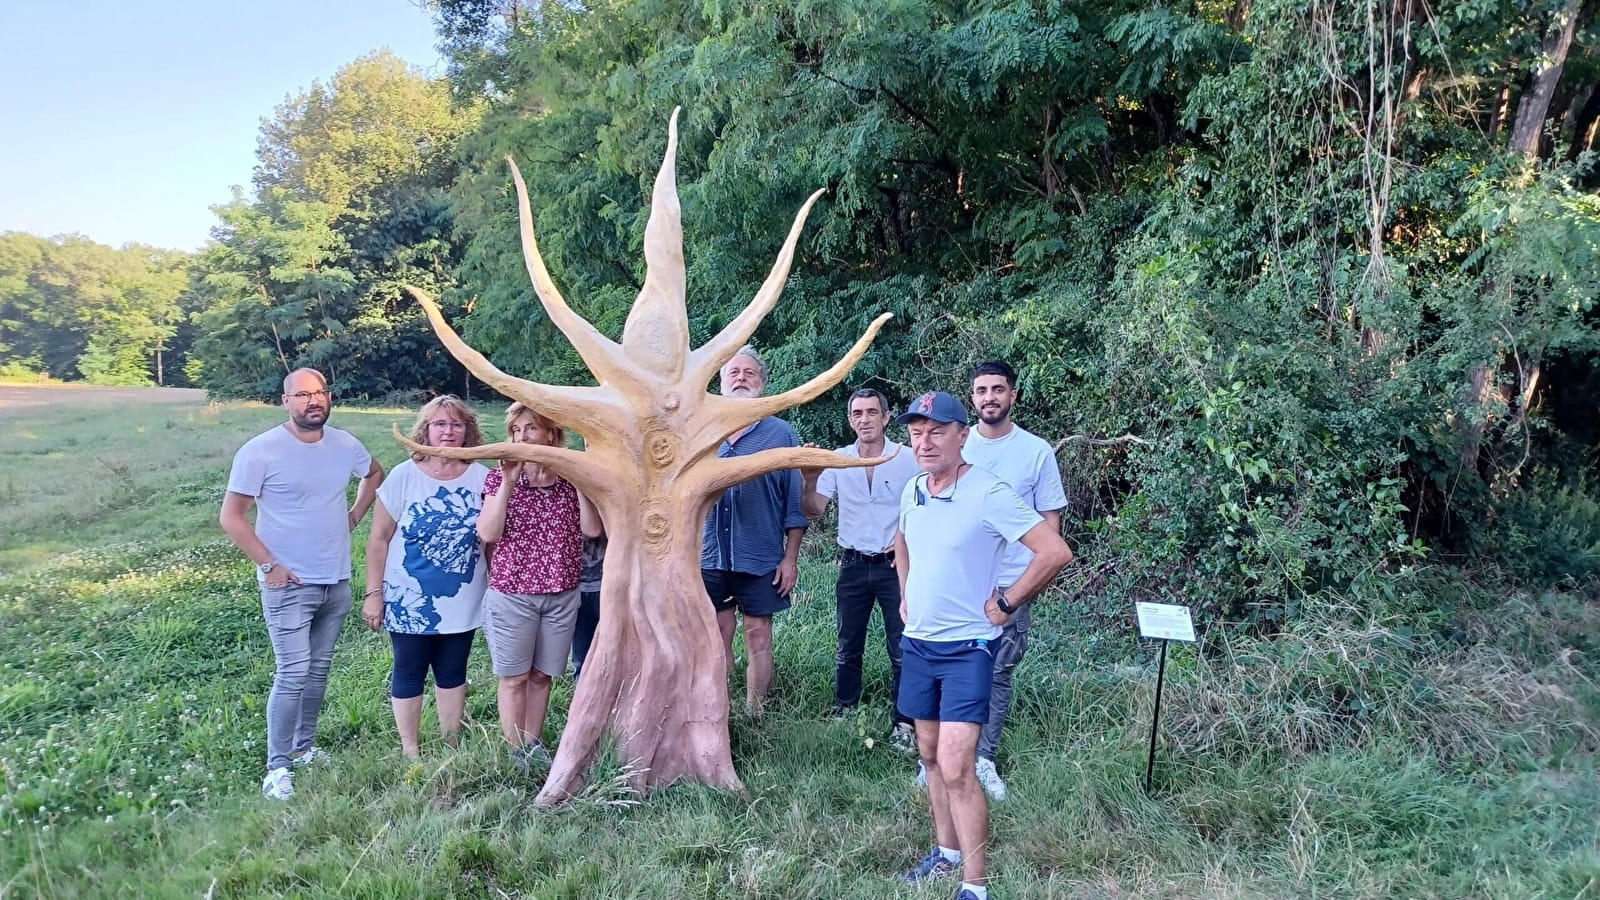 Inhuldiging van Chemins d'artistes (het kunst- en natuurpad van Ruban Vert): Inhuldiging wandeling met kunstwerken en land'art langs de route